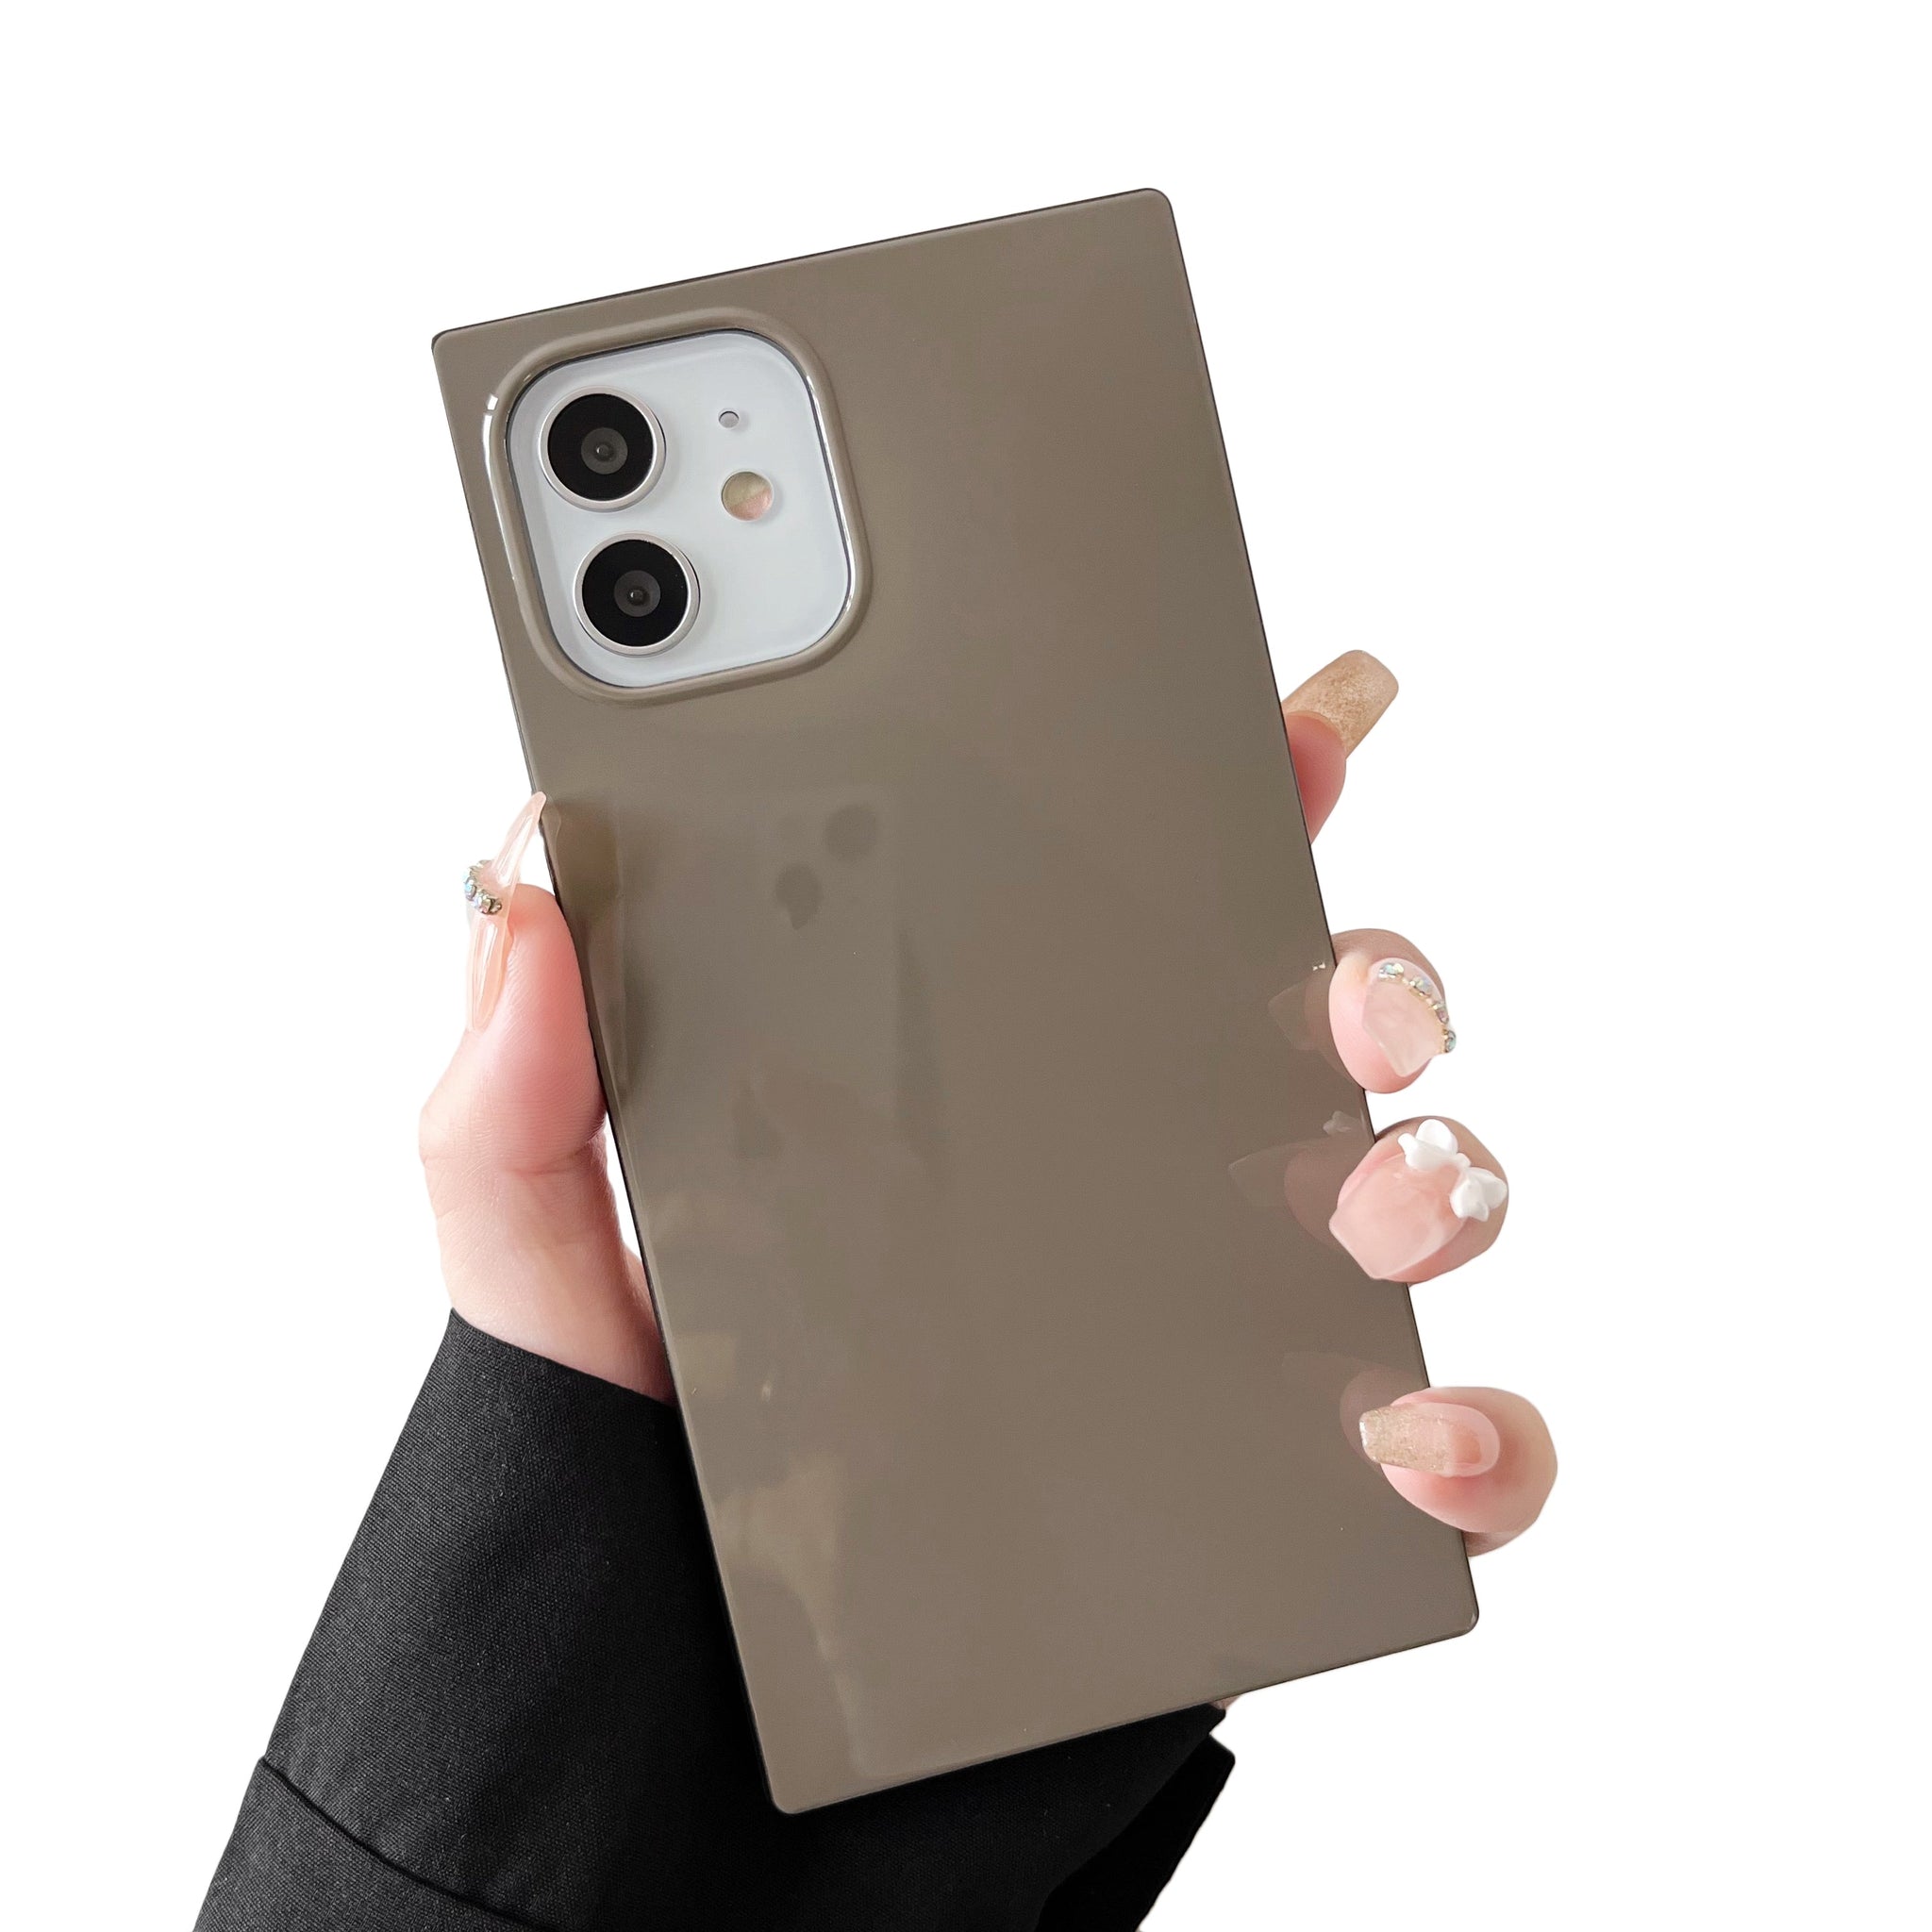 iPhone 11 Pro Max Case Square Neutral Plain Color (Elephant Gray)